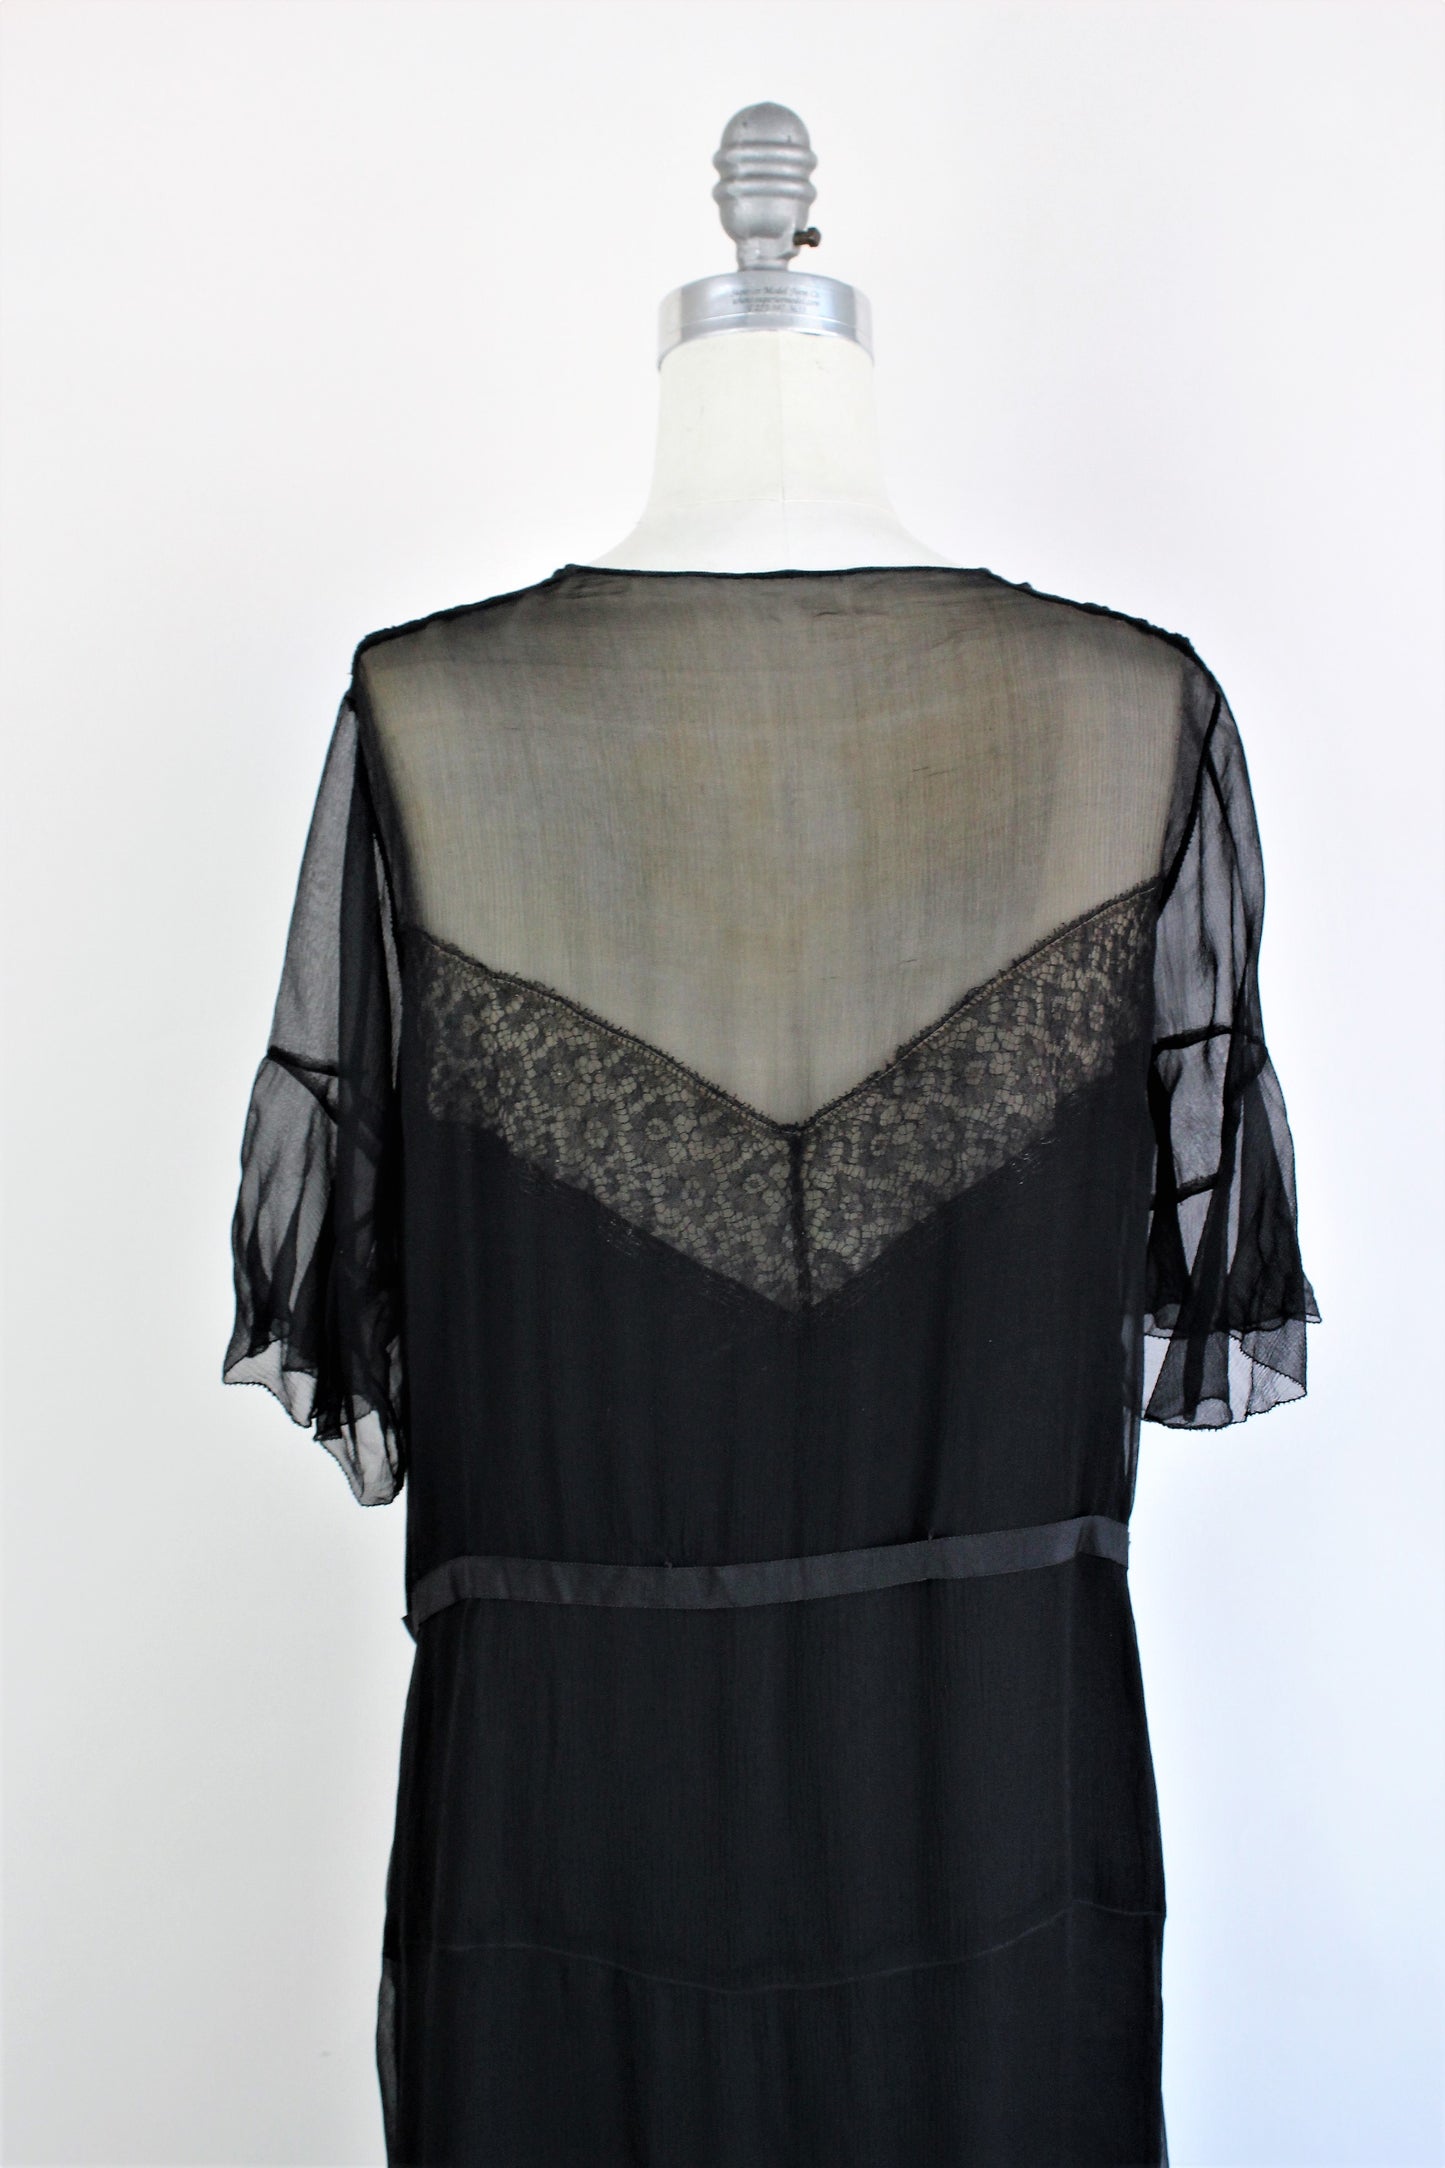 Vintage 1920s Black Silk Chiffon Dress